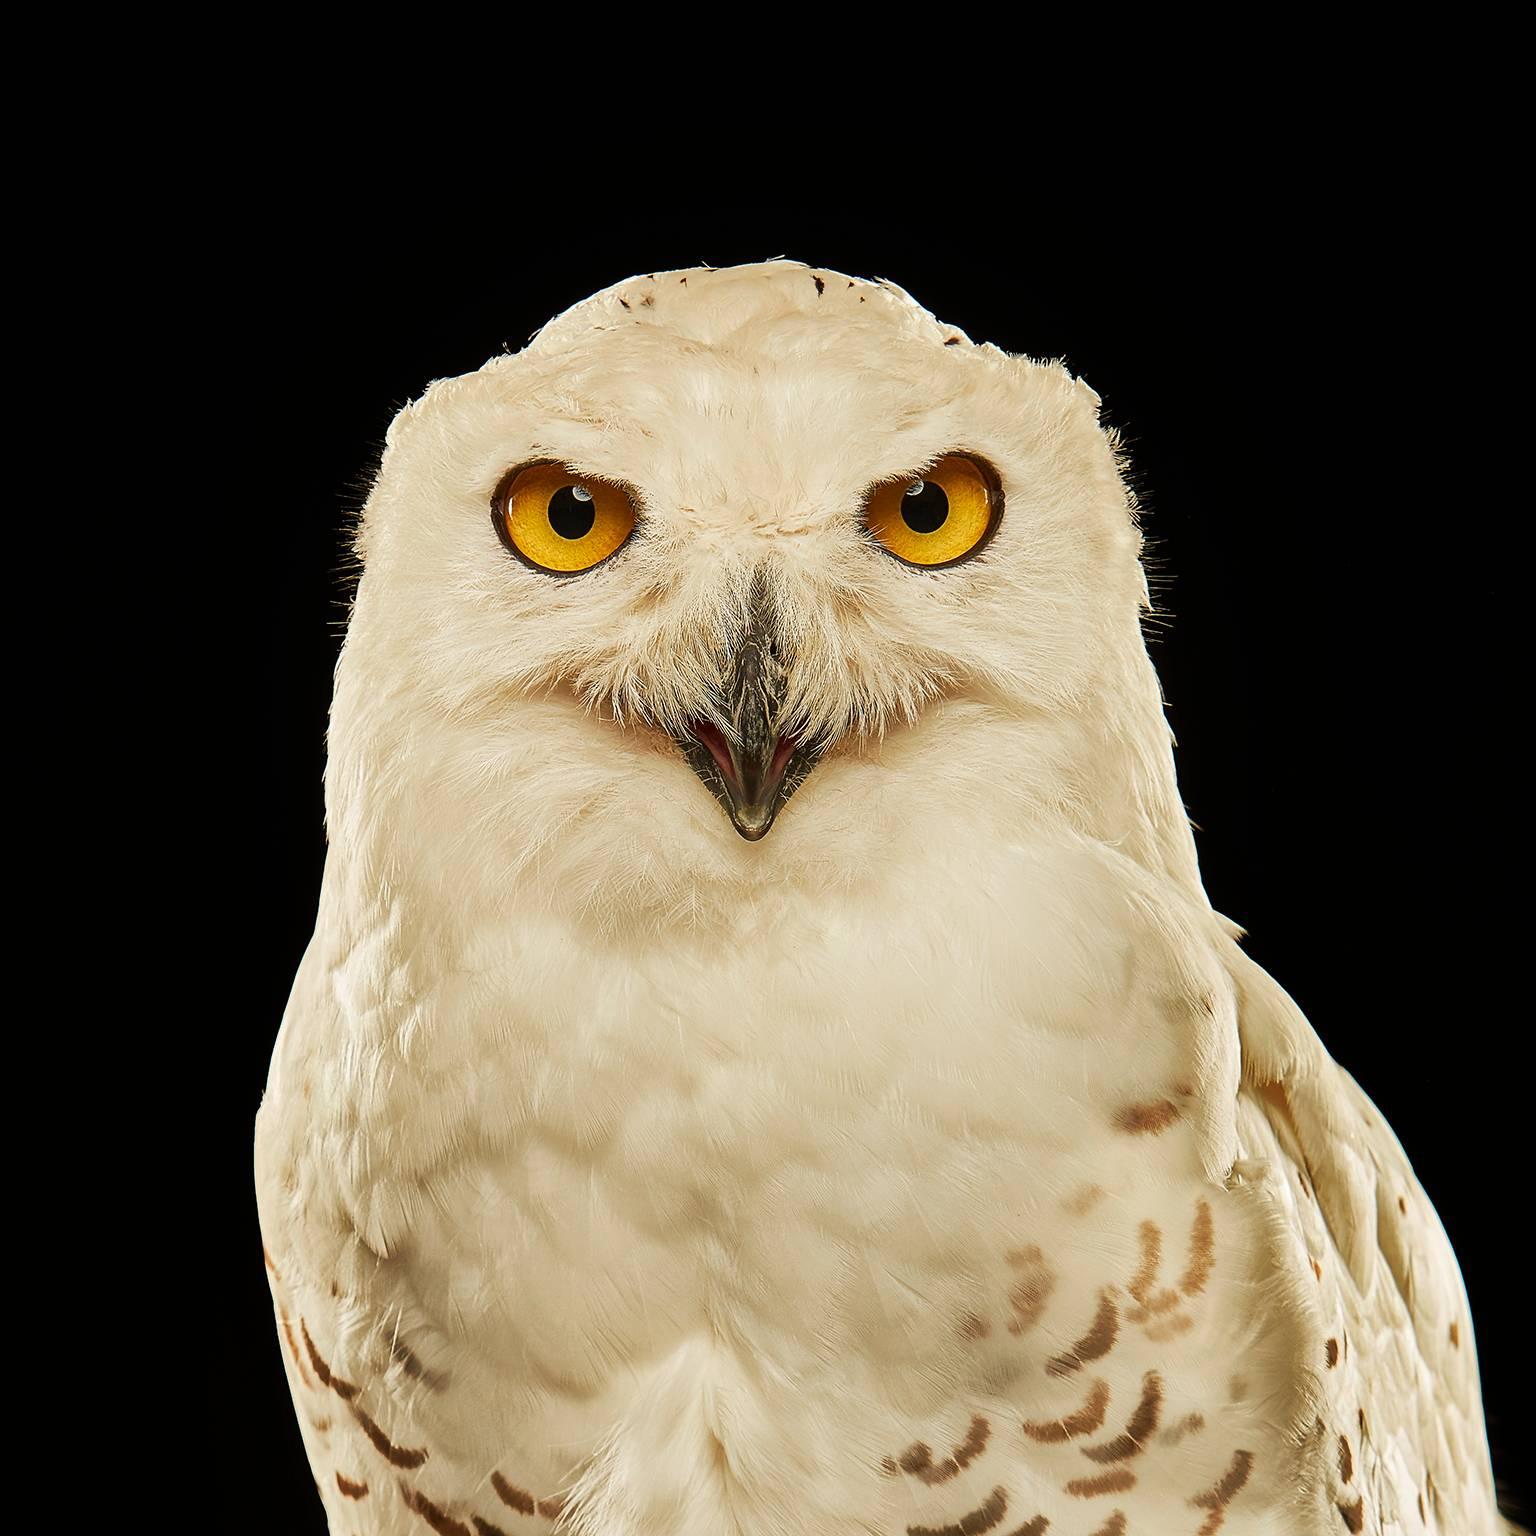 Birds of Prey - Snowy Owl No. 11 - Photograph by Chris Gordaneer